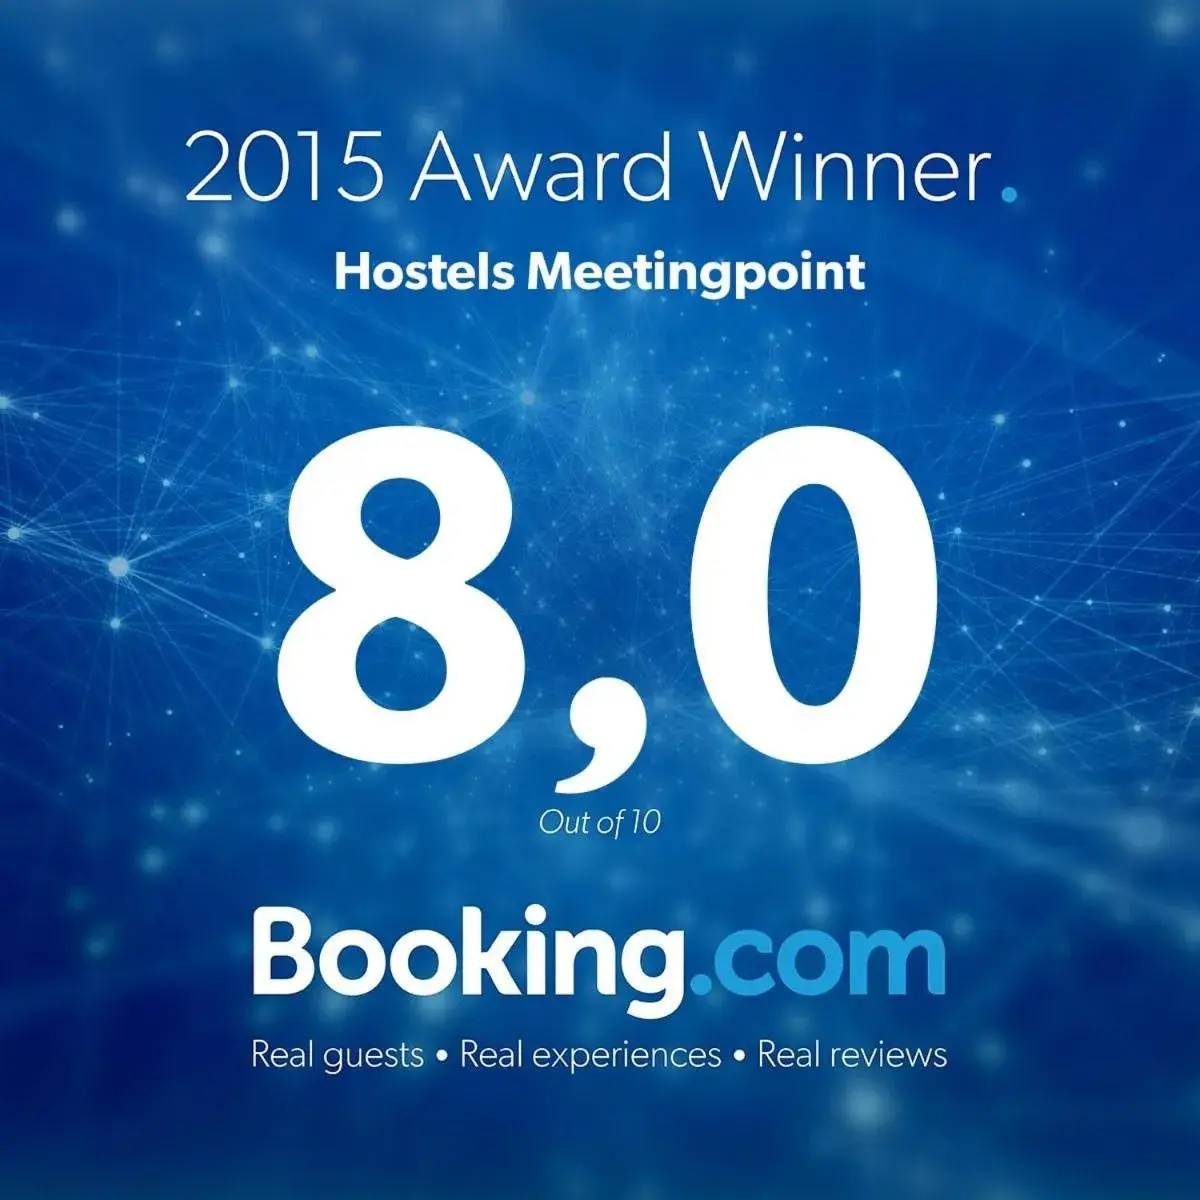 Certificate/Award in Hostels Meetingpoint